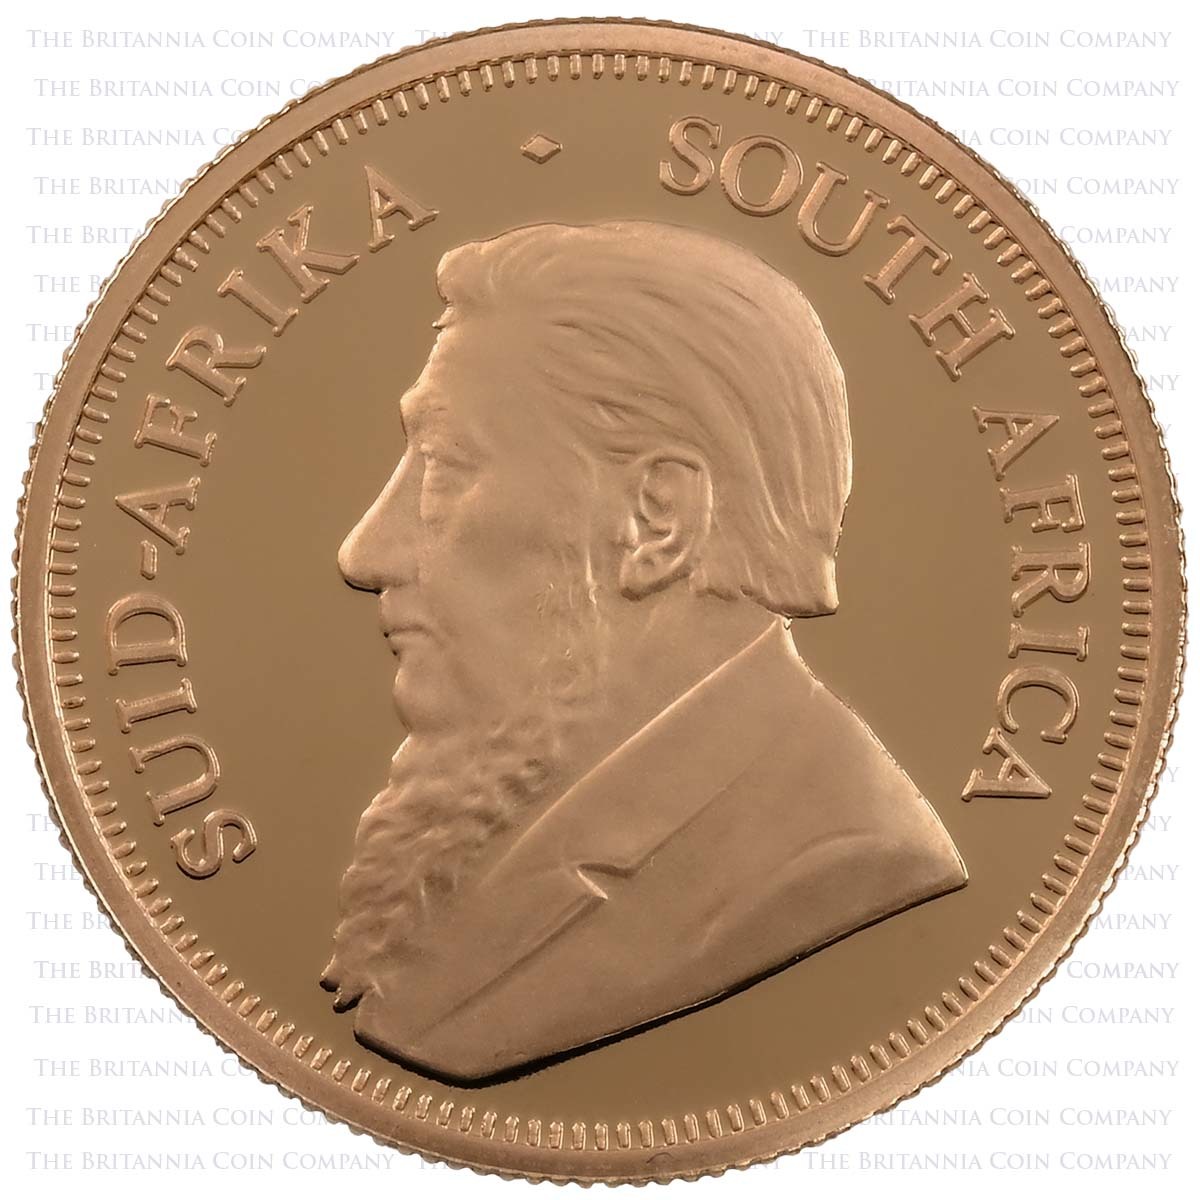 2006 4 Coin Gold Proof Krugerrand Set Edward VII 1 Ounce Obverse